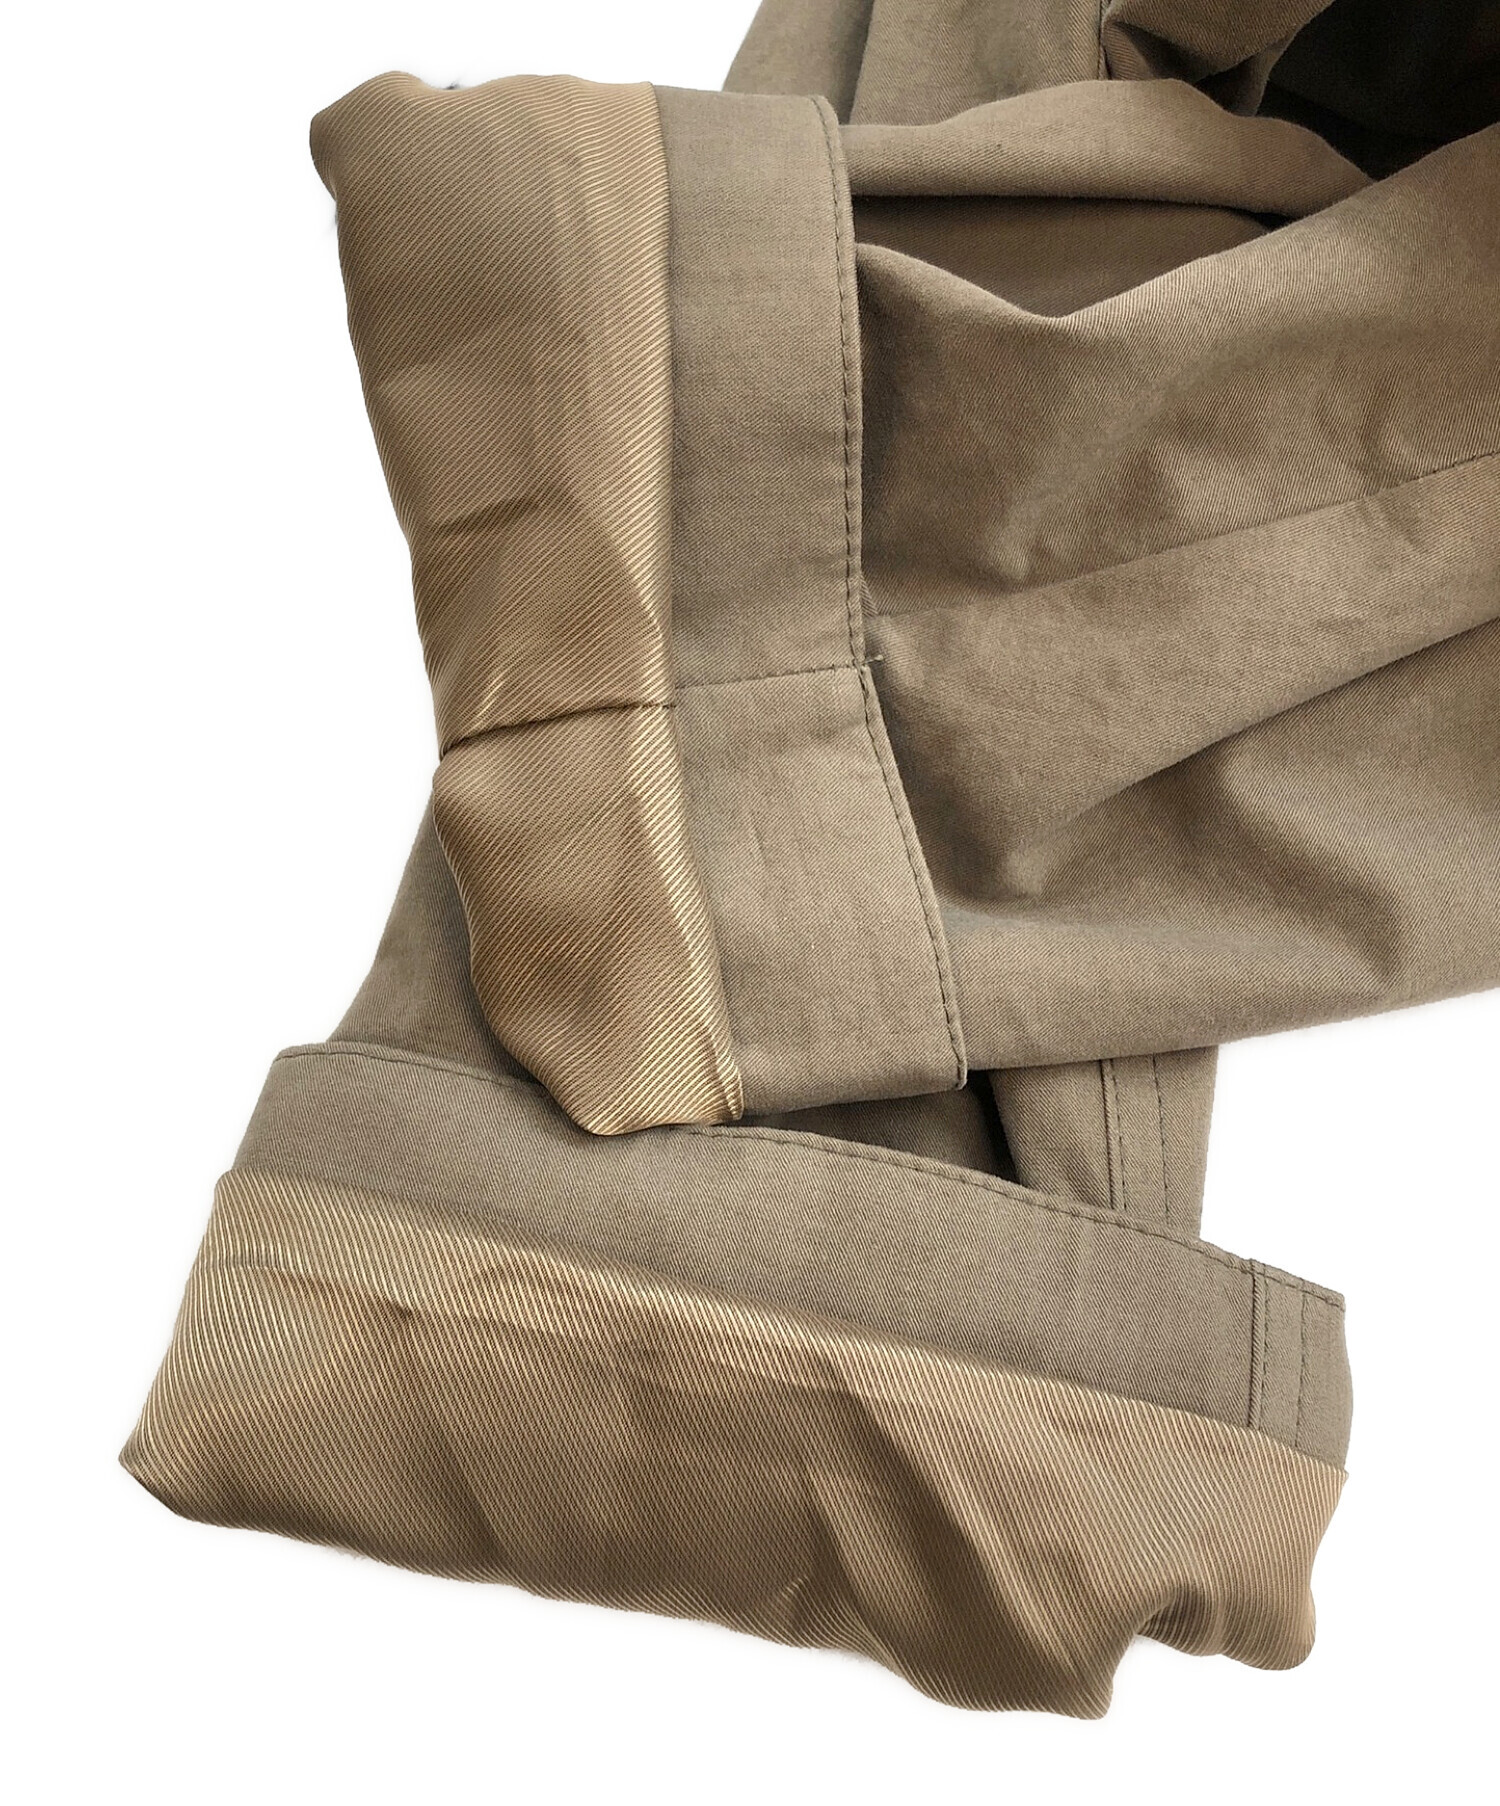 RANDEBOO (ランデブー) Variation trench coat/ヴァリエーション トレンチコート カーキ サイズ:FREE